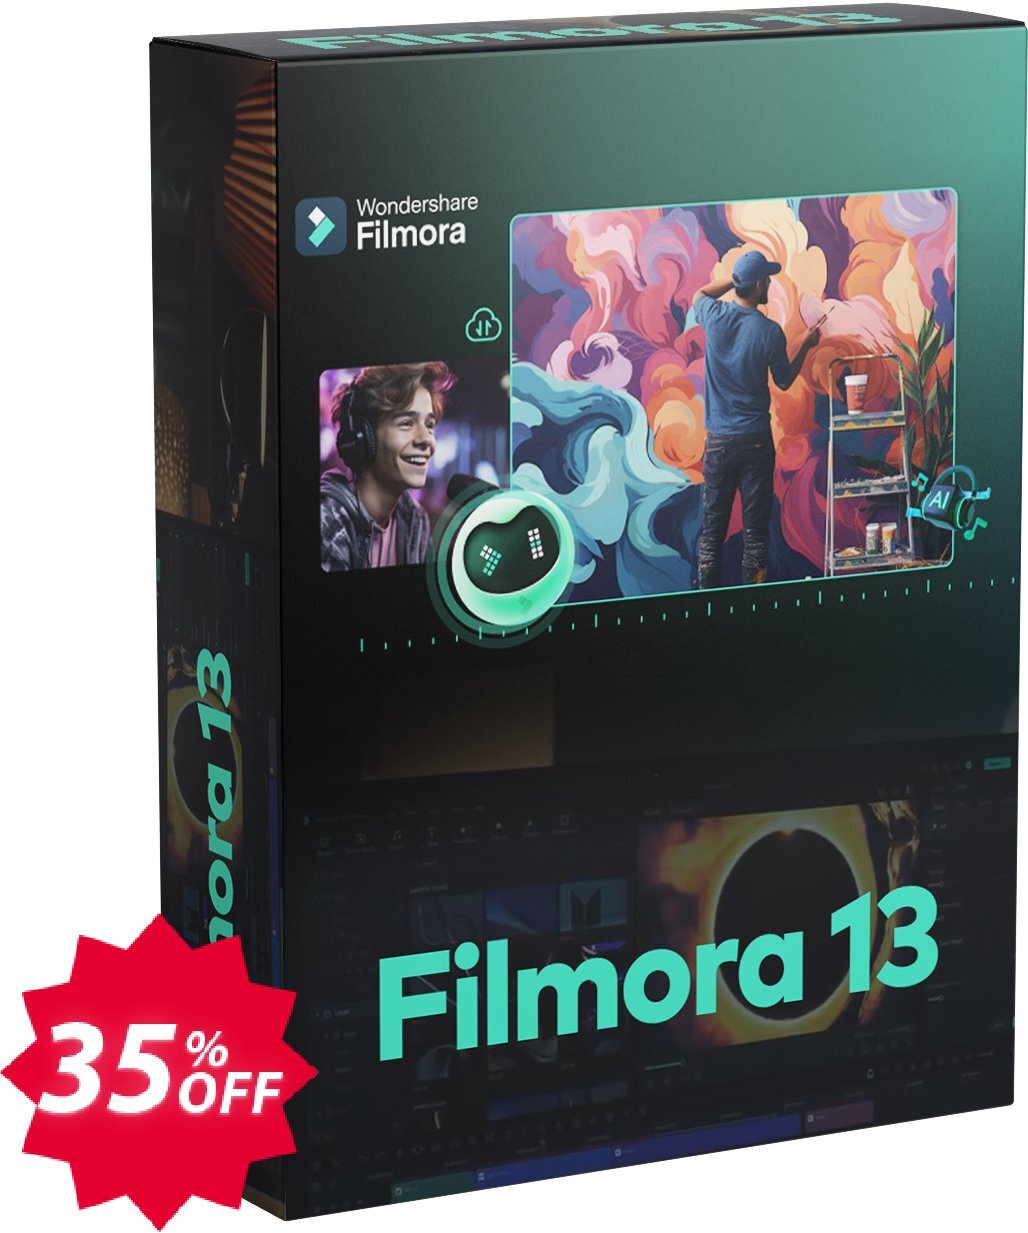 Wondershare Filmora Lifetime Coupon code 35% discount 